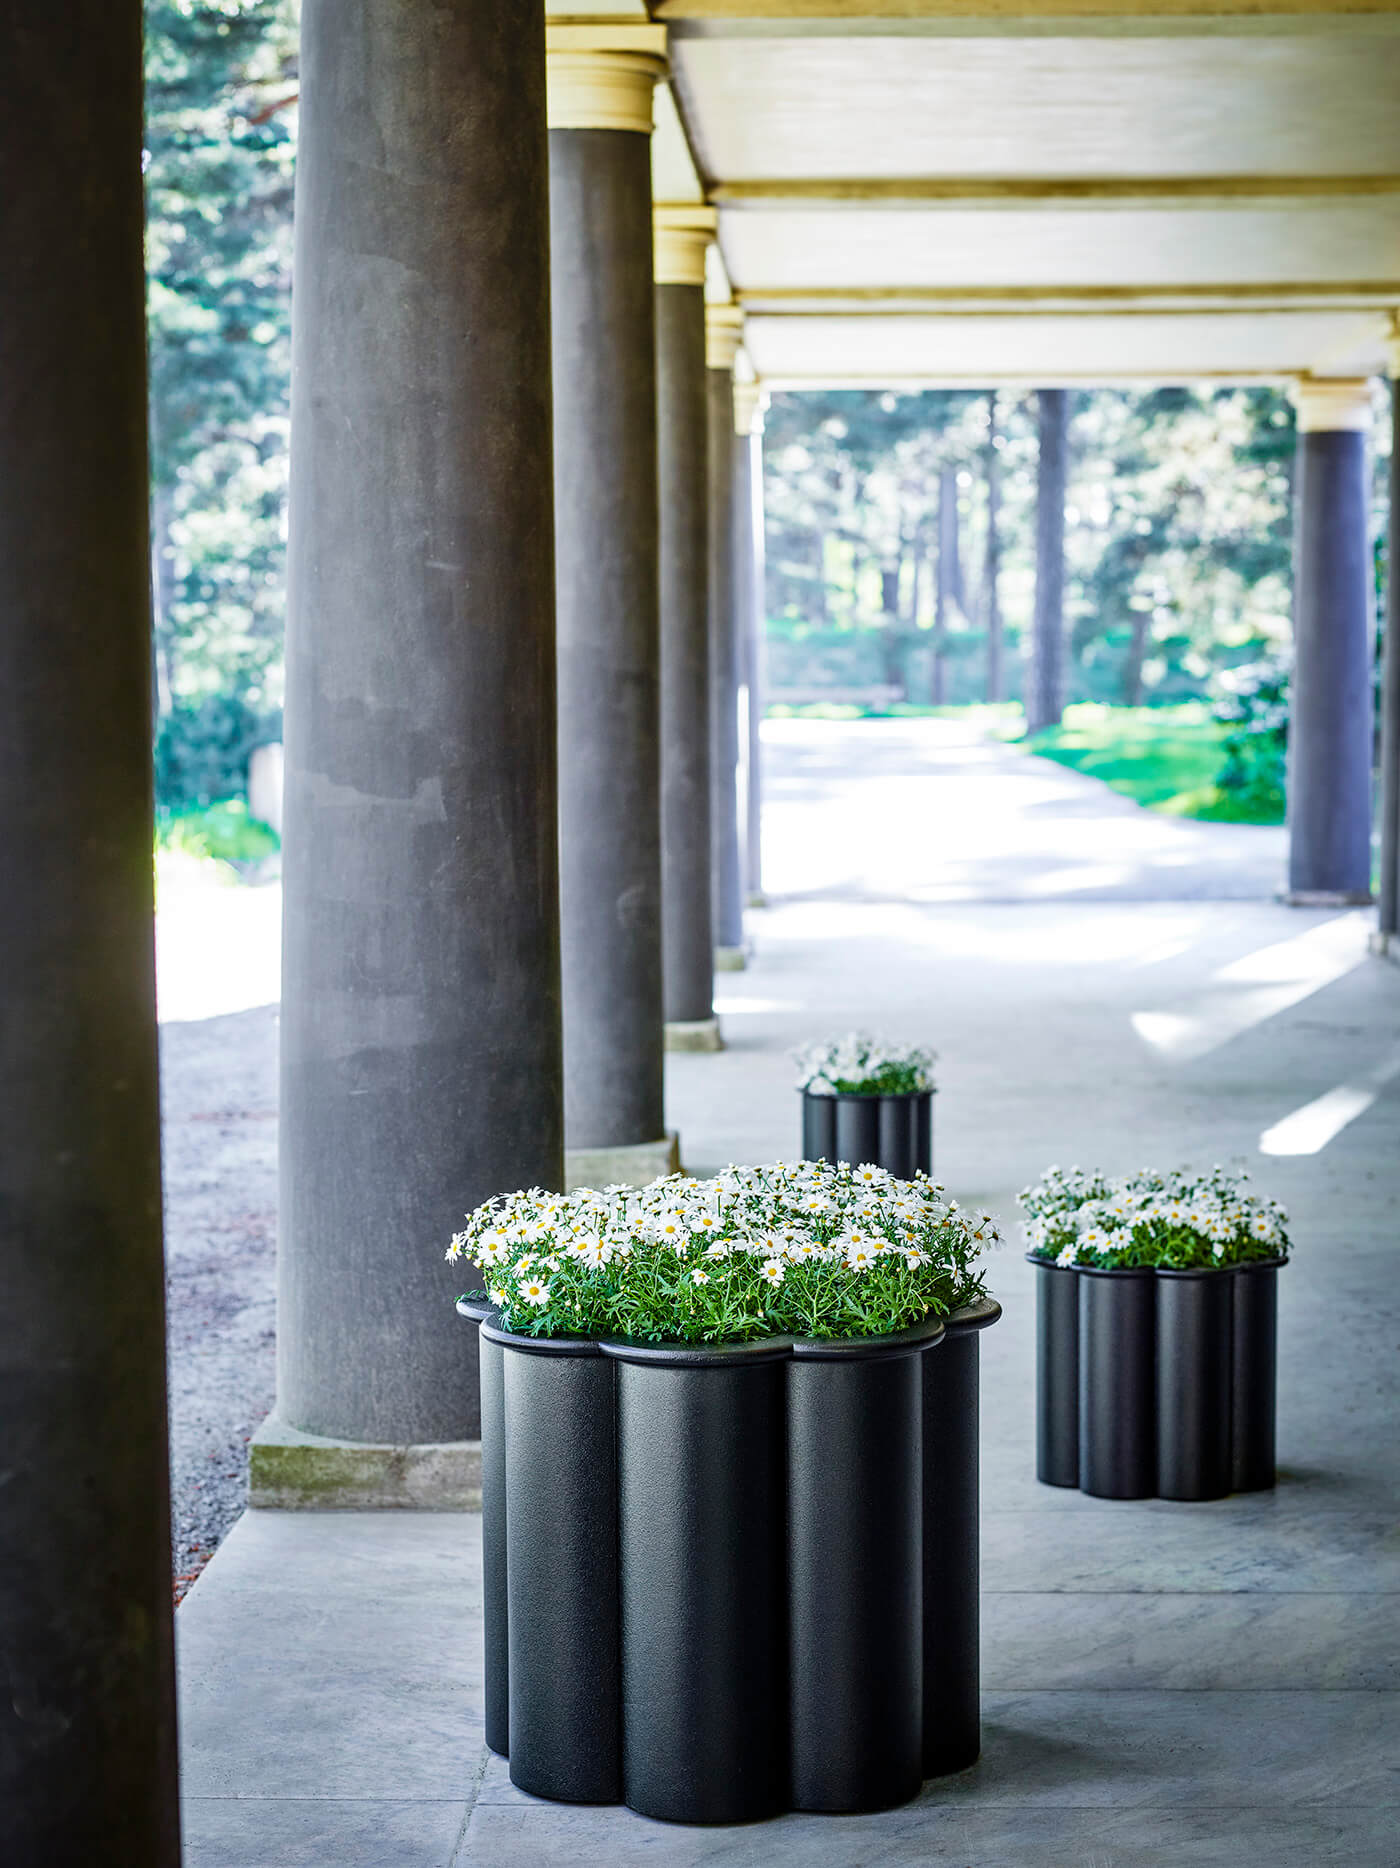 Black flower pots next to architectural pillars